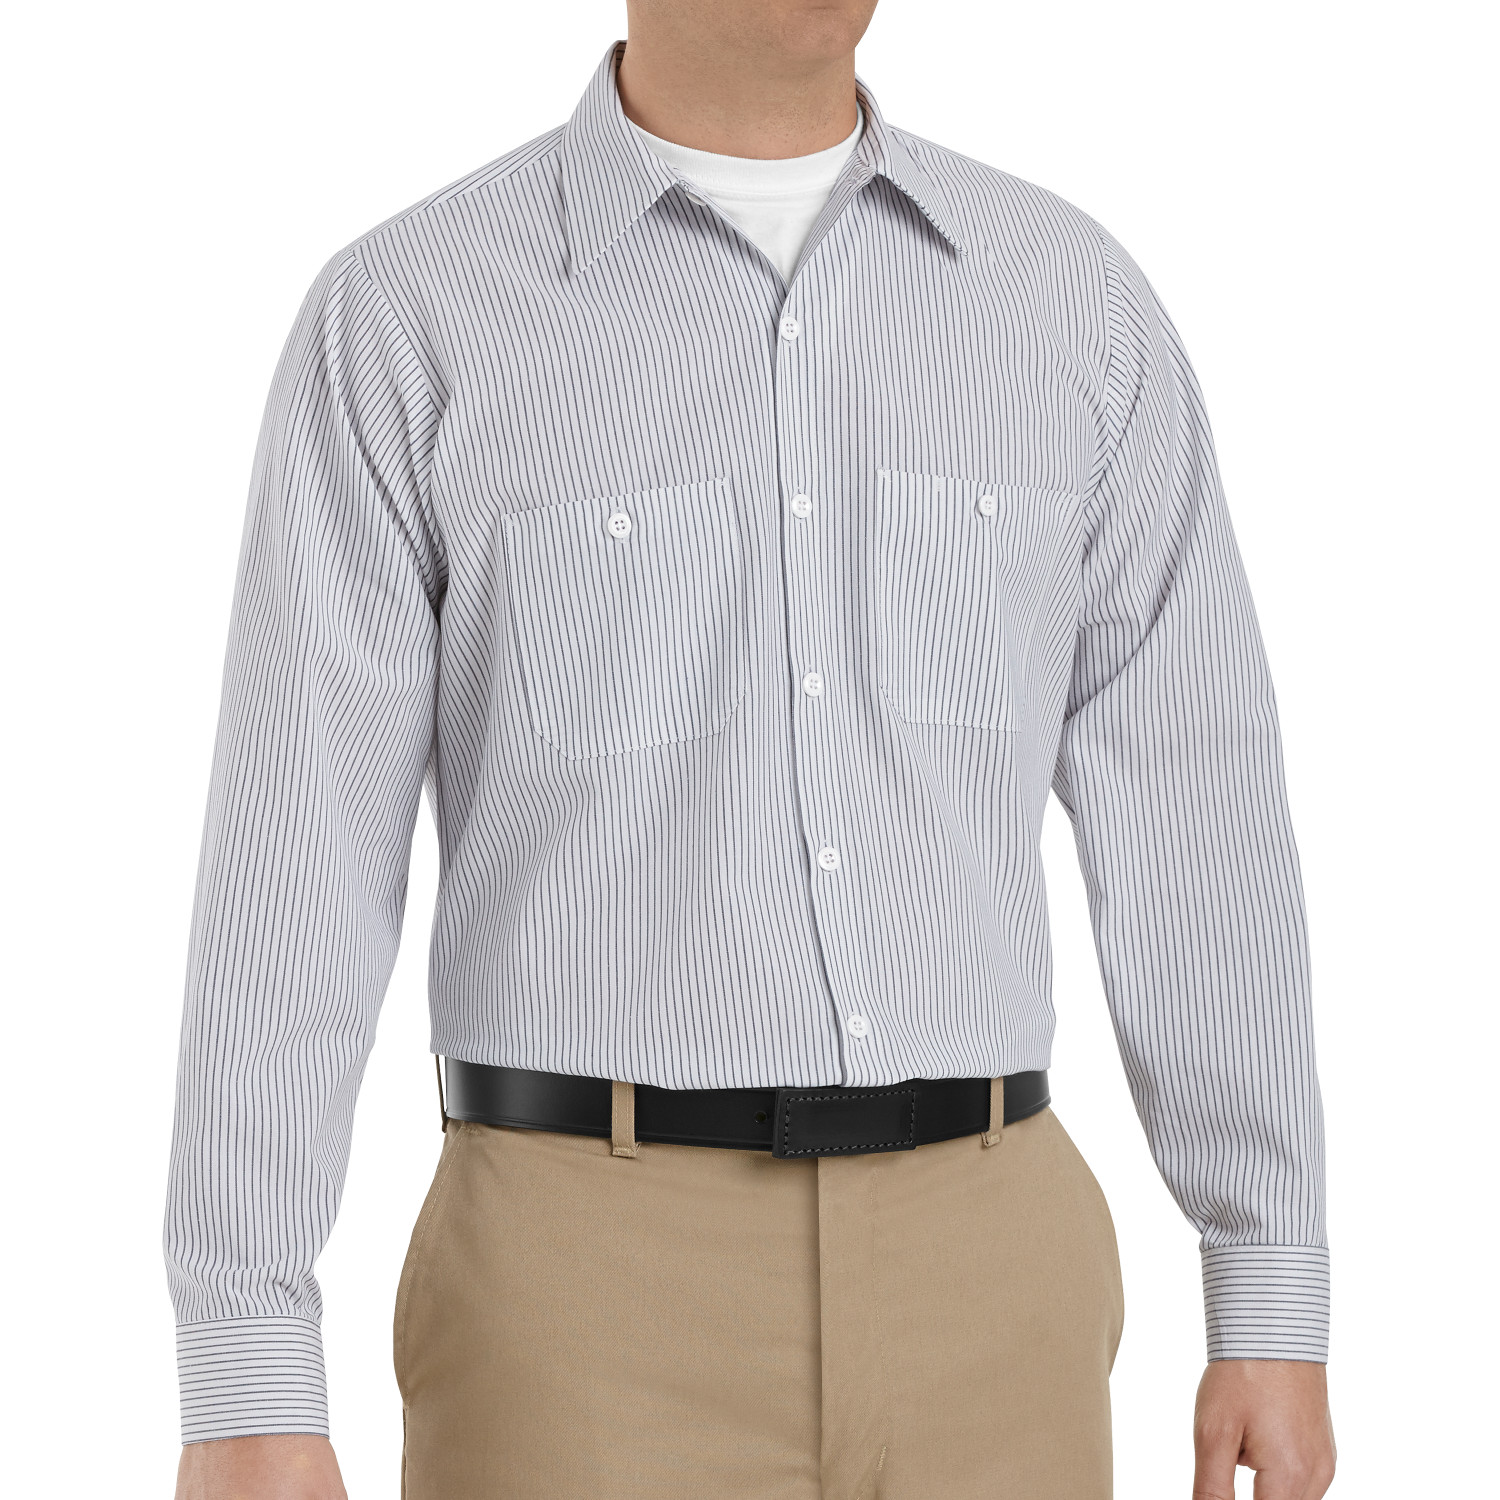 Men's Industrial Stripe Work Shirt SP10CW